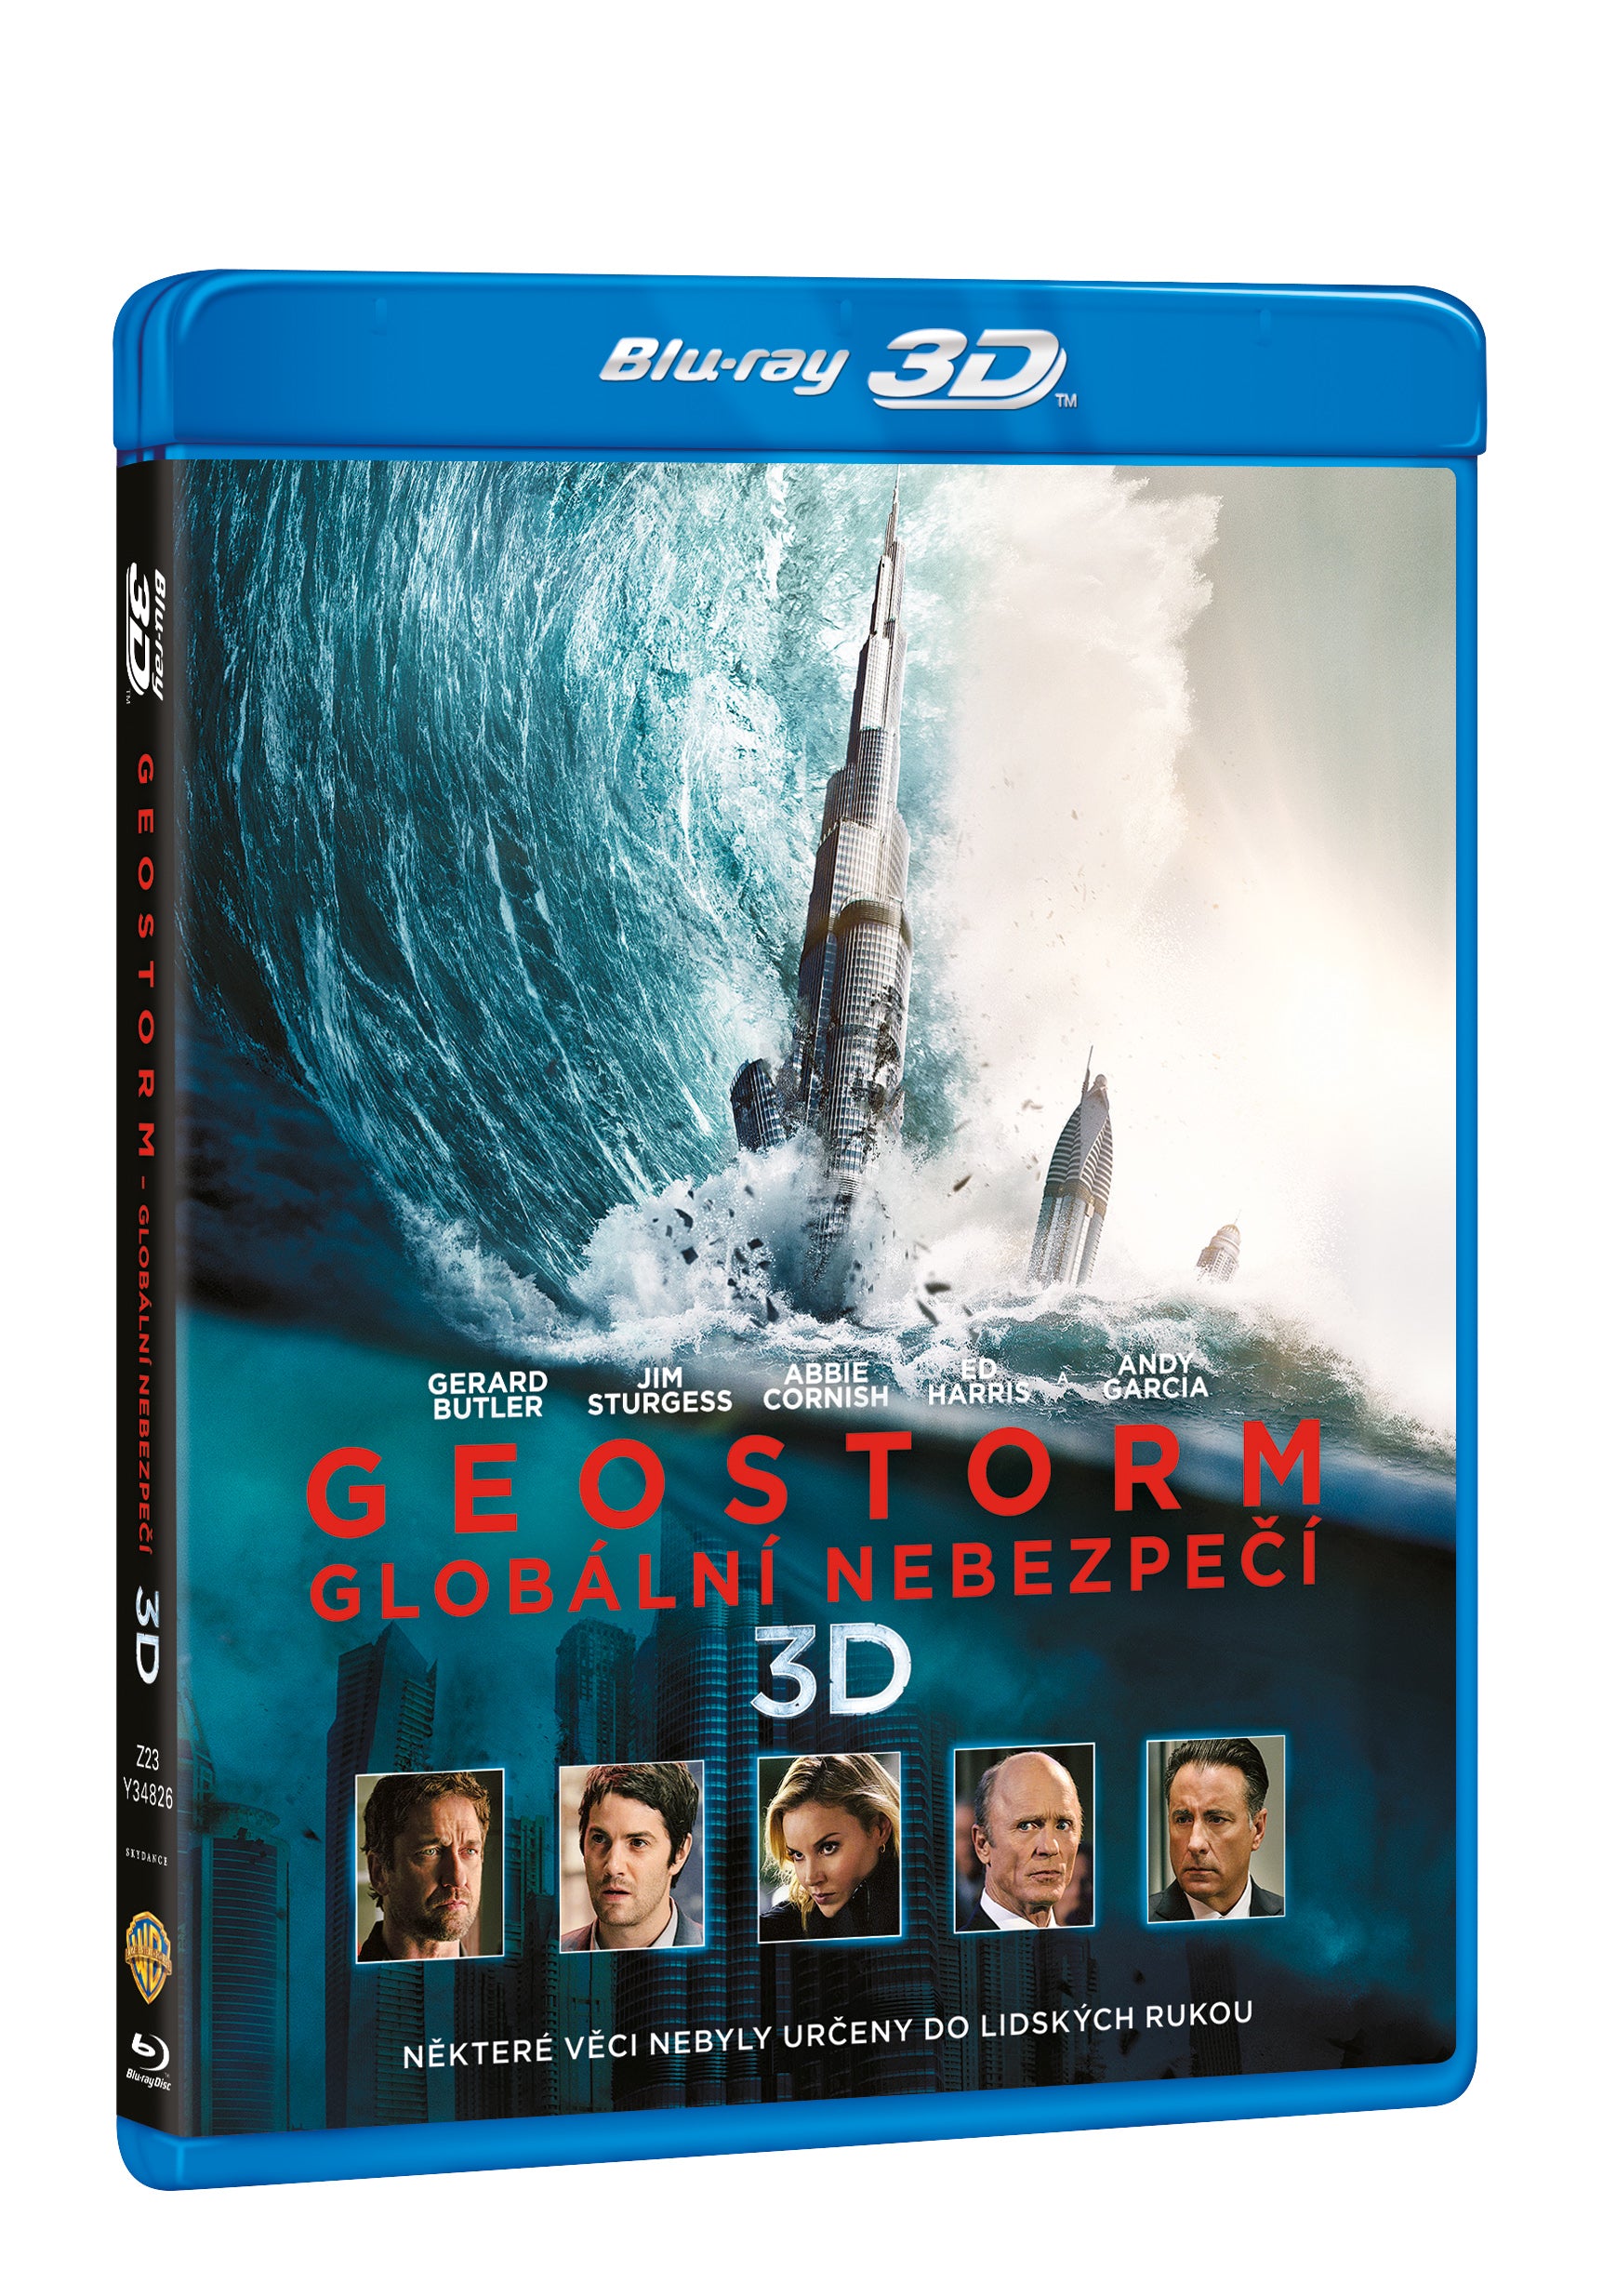 Geostorm - Globalni nebezpeci 2BD (3D+2D) / Geostorm - Czech version